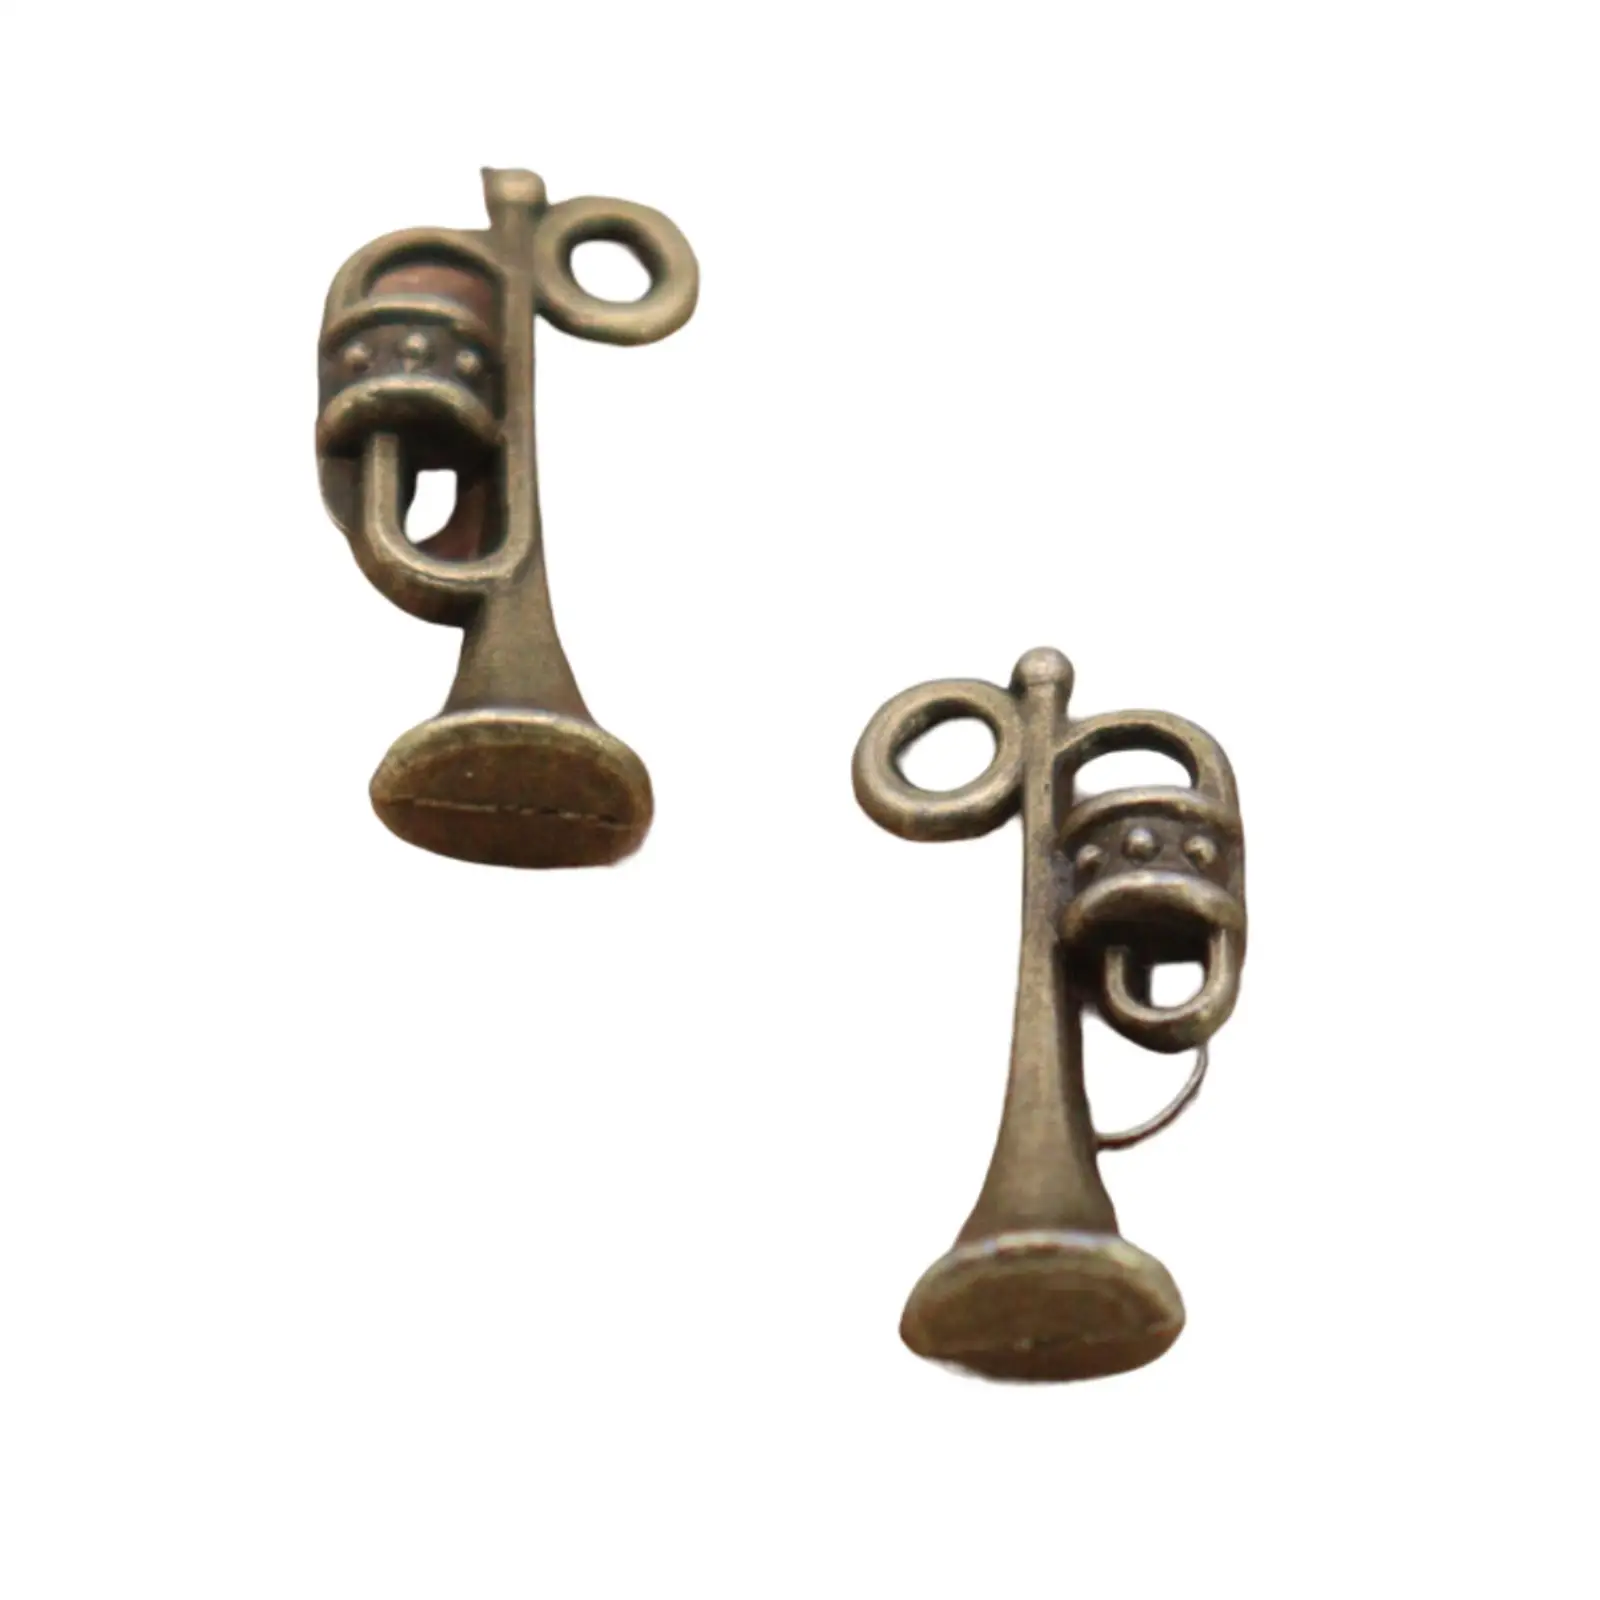 100Pcs Charms Pendants Vintage Style Crafts DIY Crafting Trumpet Music Pendants Zinc Alloy Pendant Key Charms for Bracelet